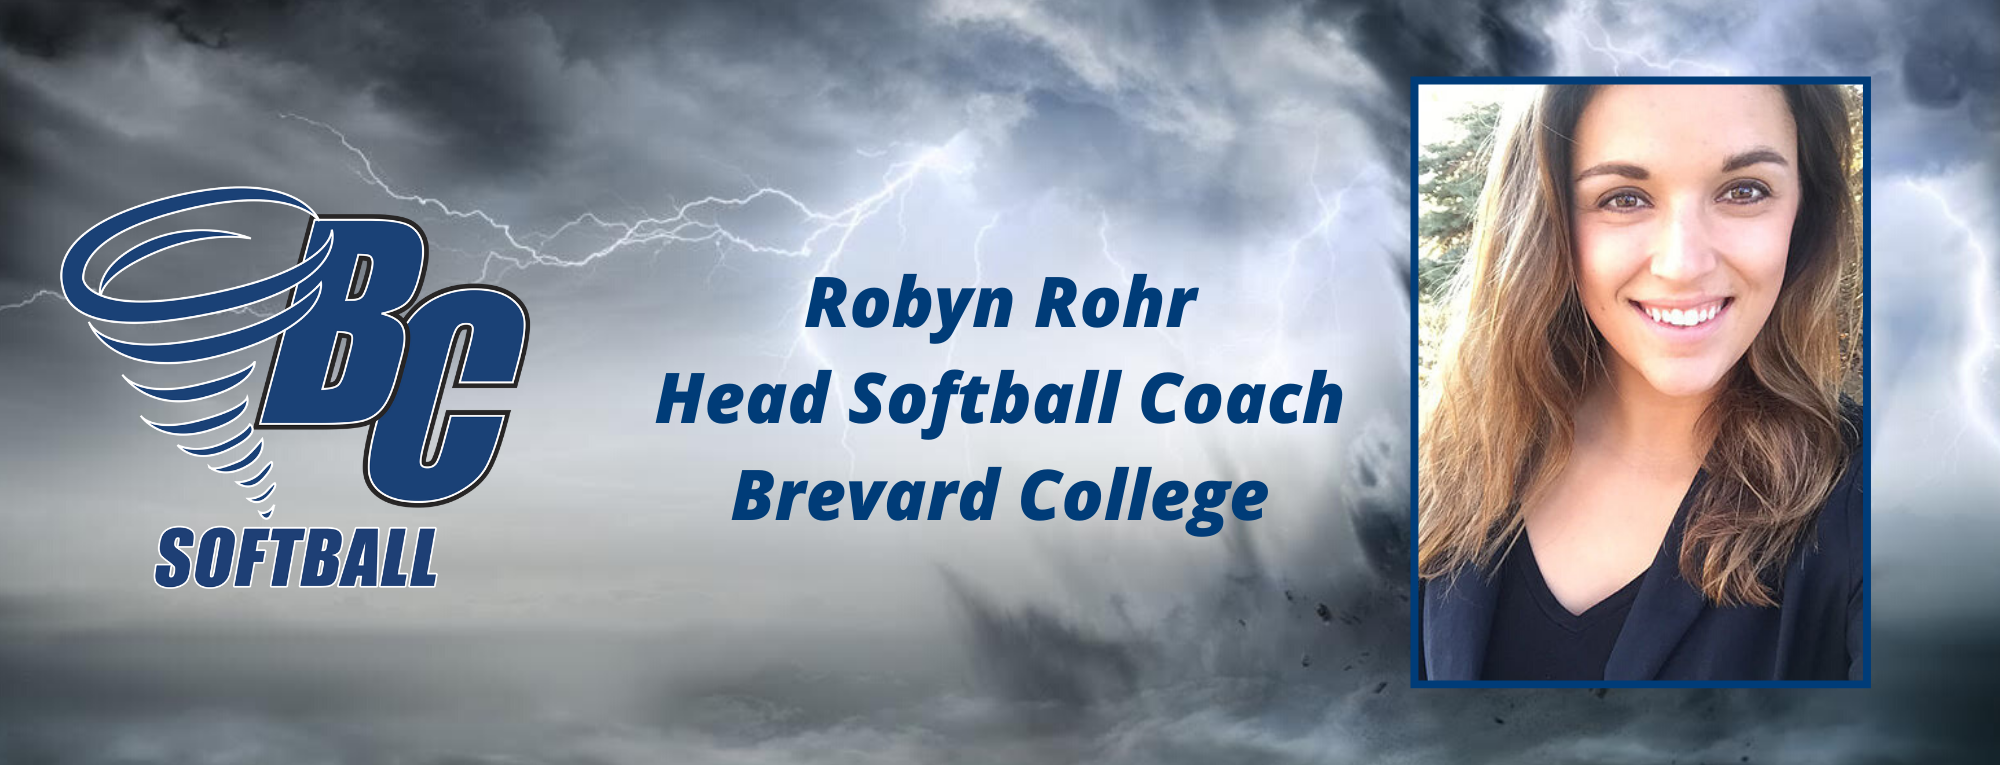 Robyn Rohr Named Head Softball Coach at Brevard College